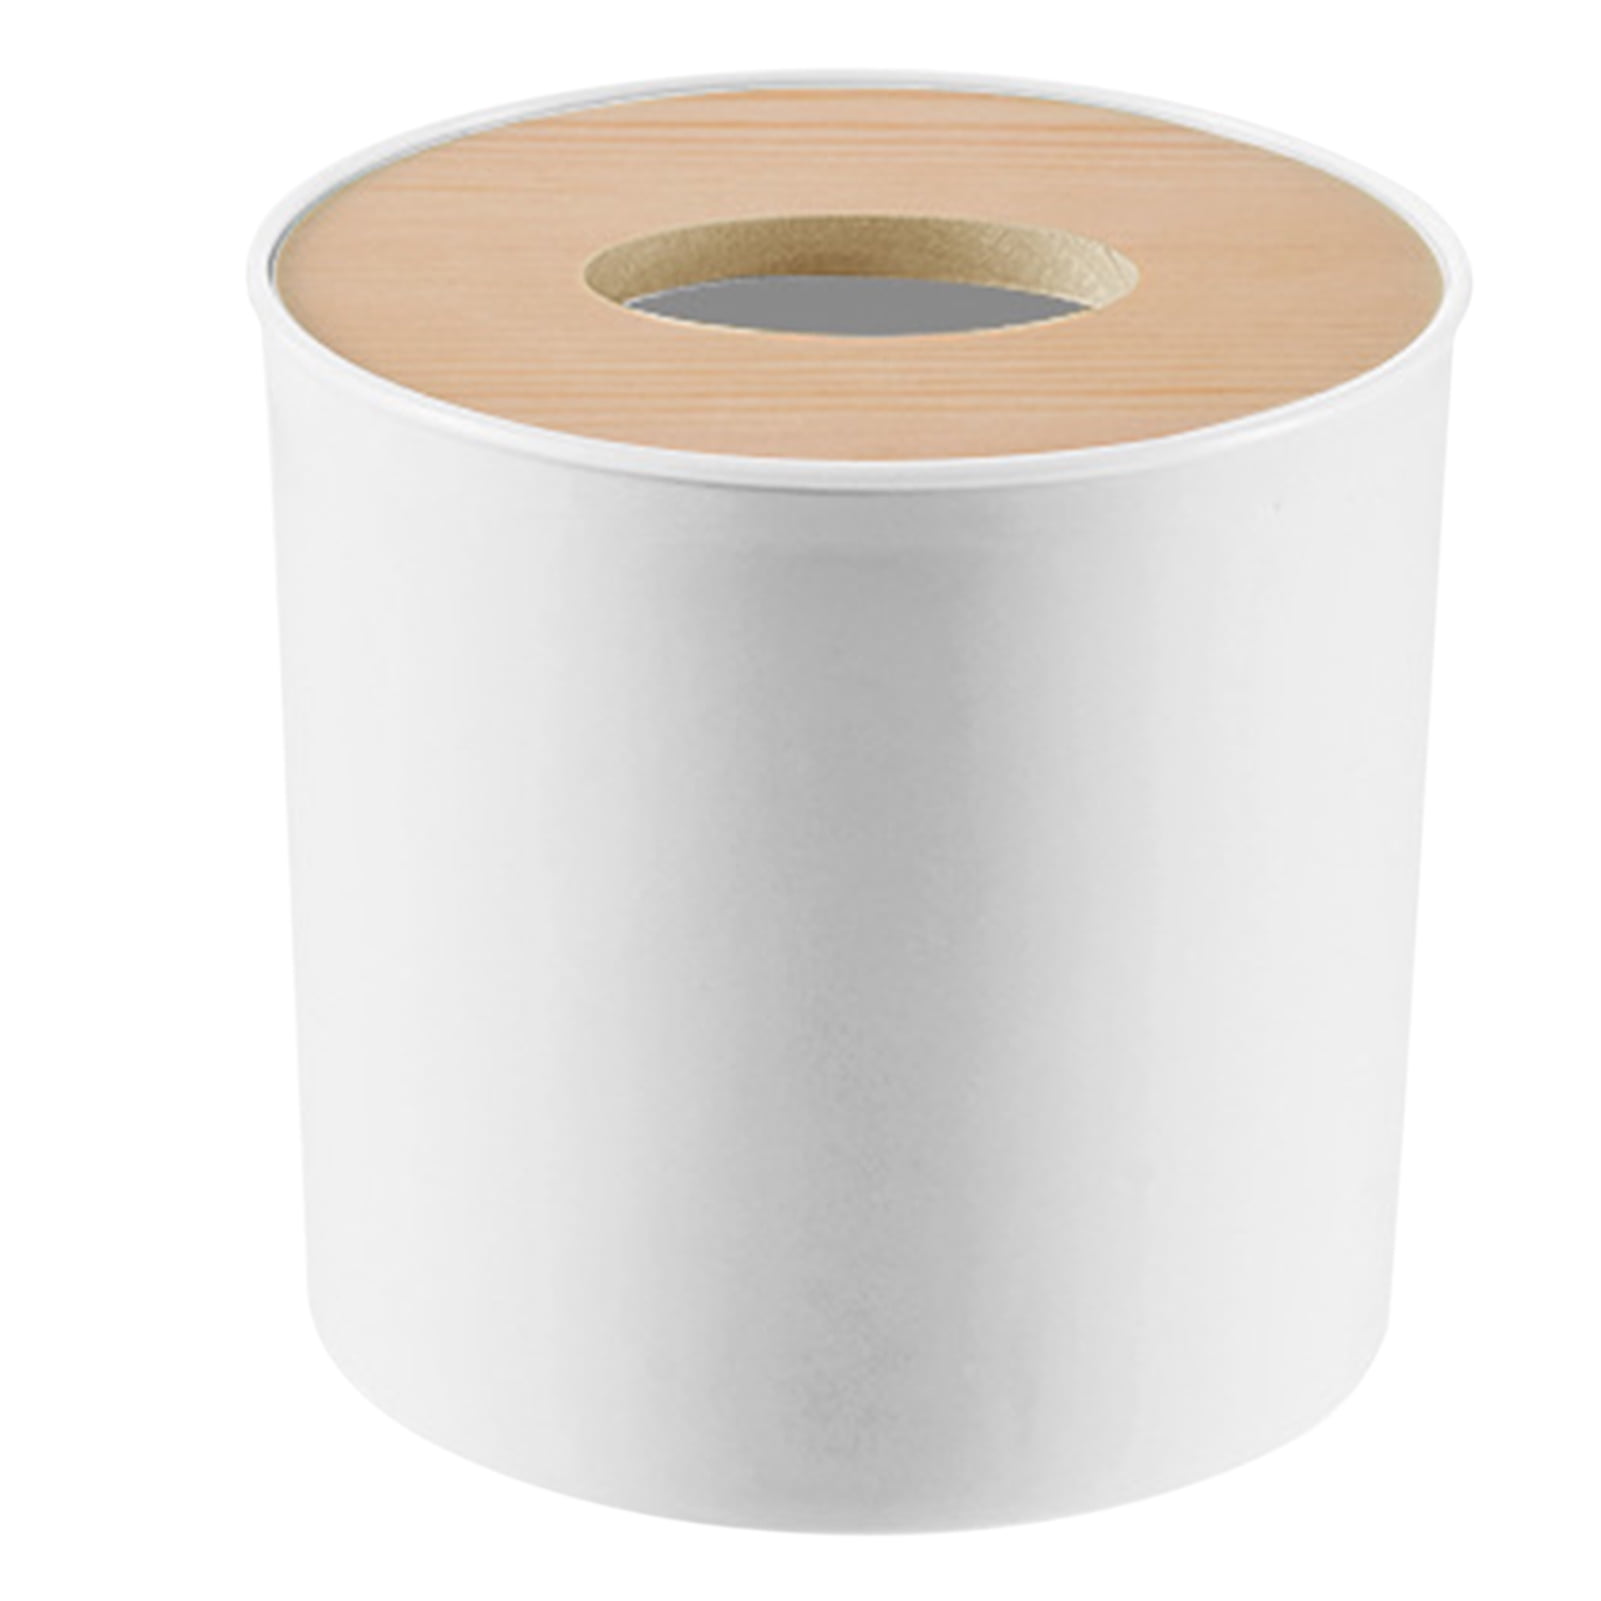 Household Tissue Box Wooden Toilet Napkin Storage Bathroom Paper Roll Dispenser 